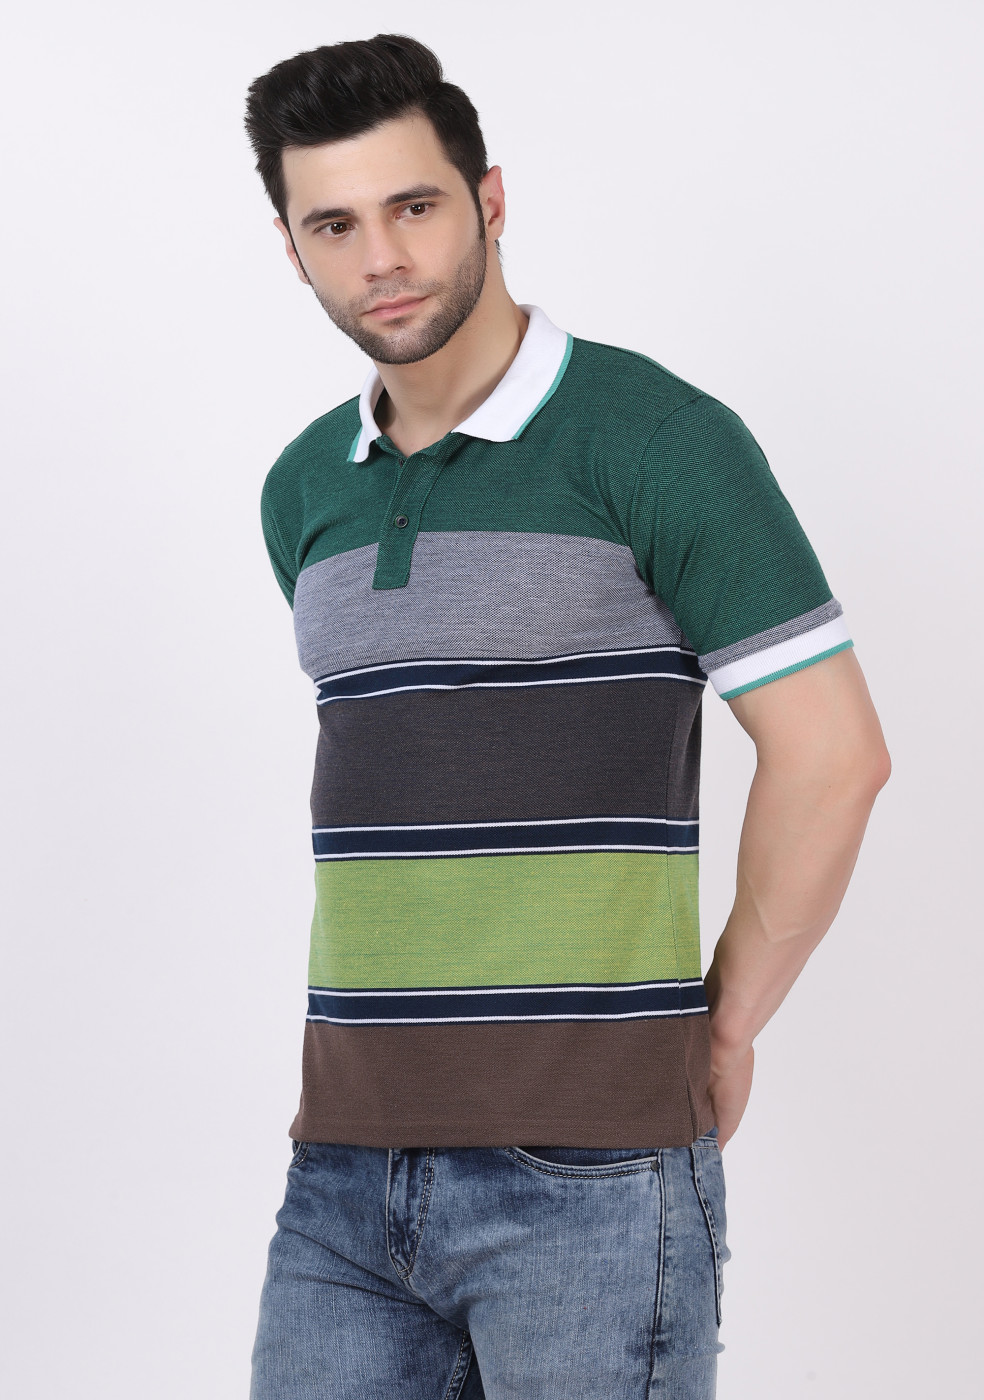 Striped Matty Cotton Collar Slim Fit Polo T-Shirt For Men